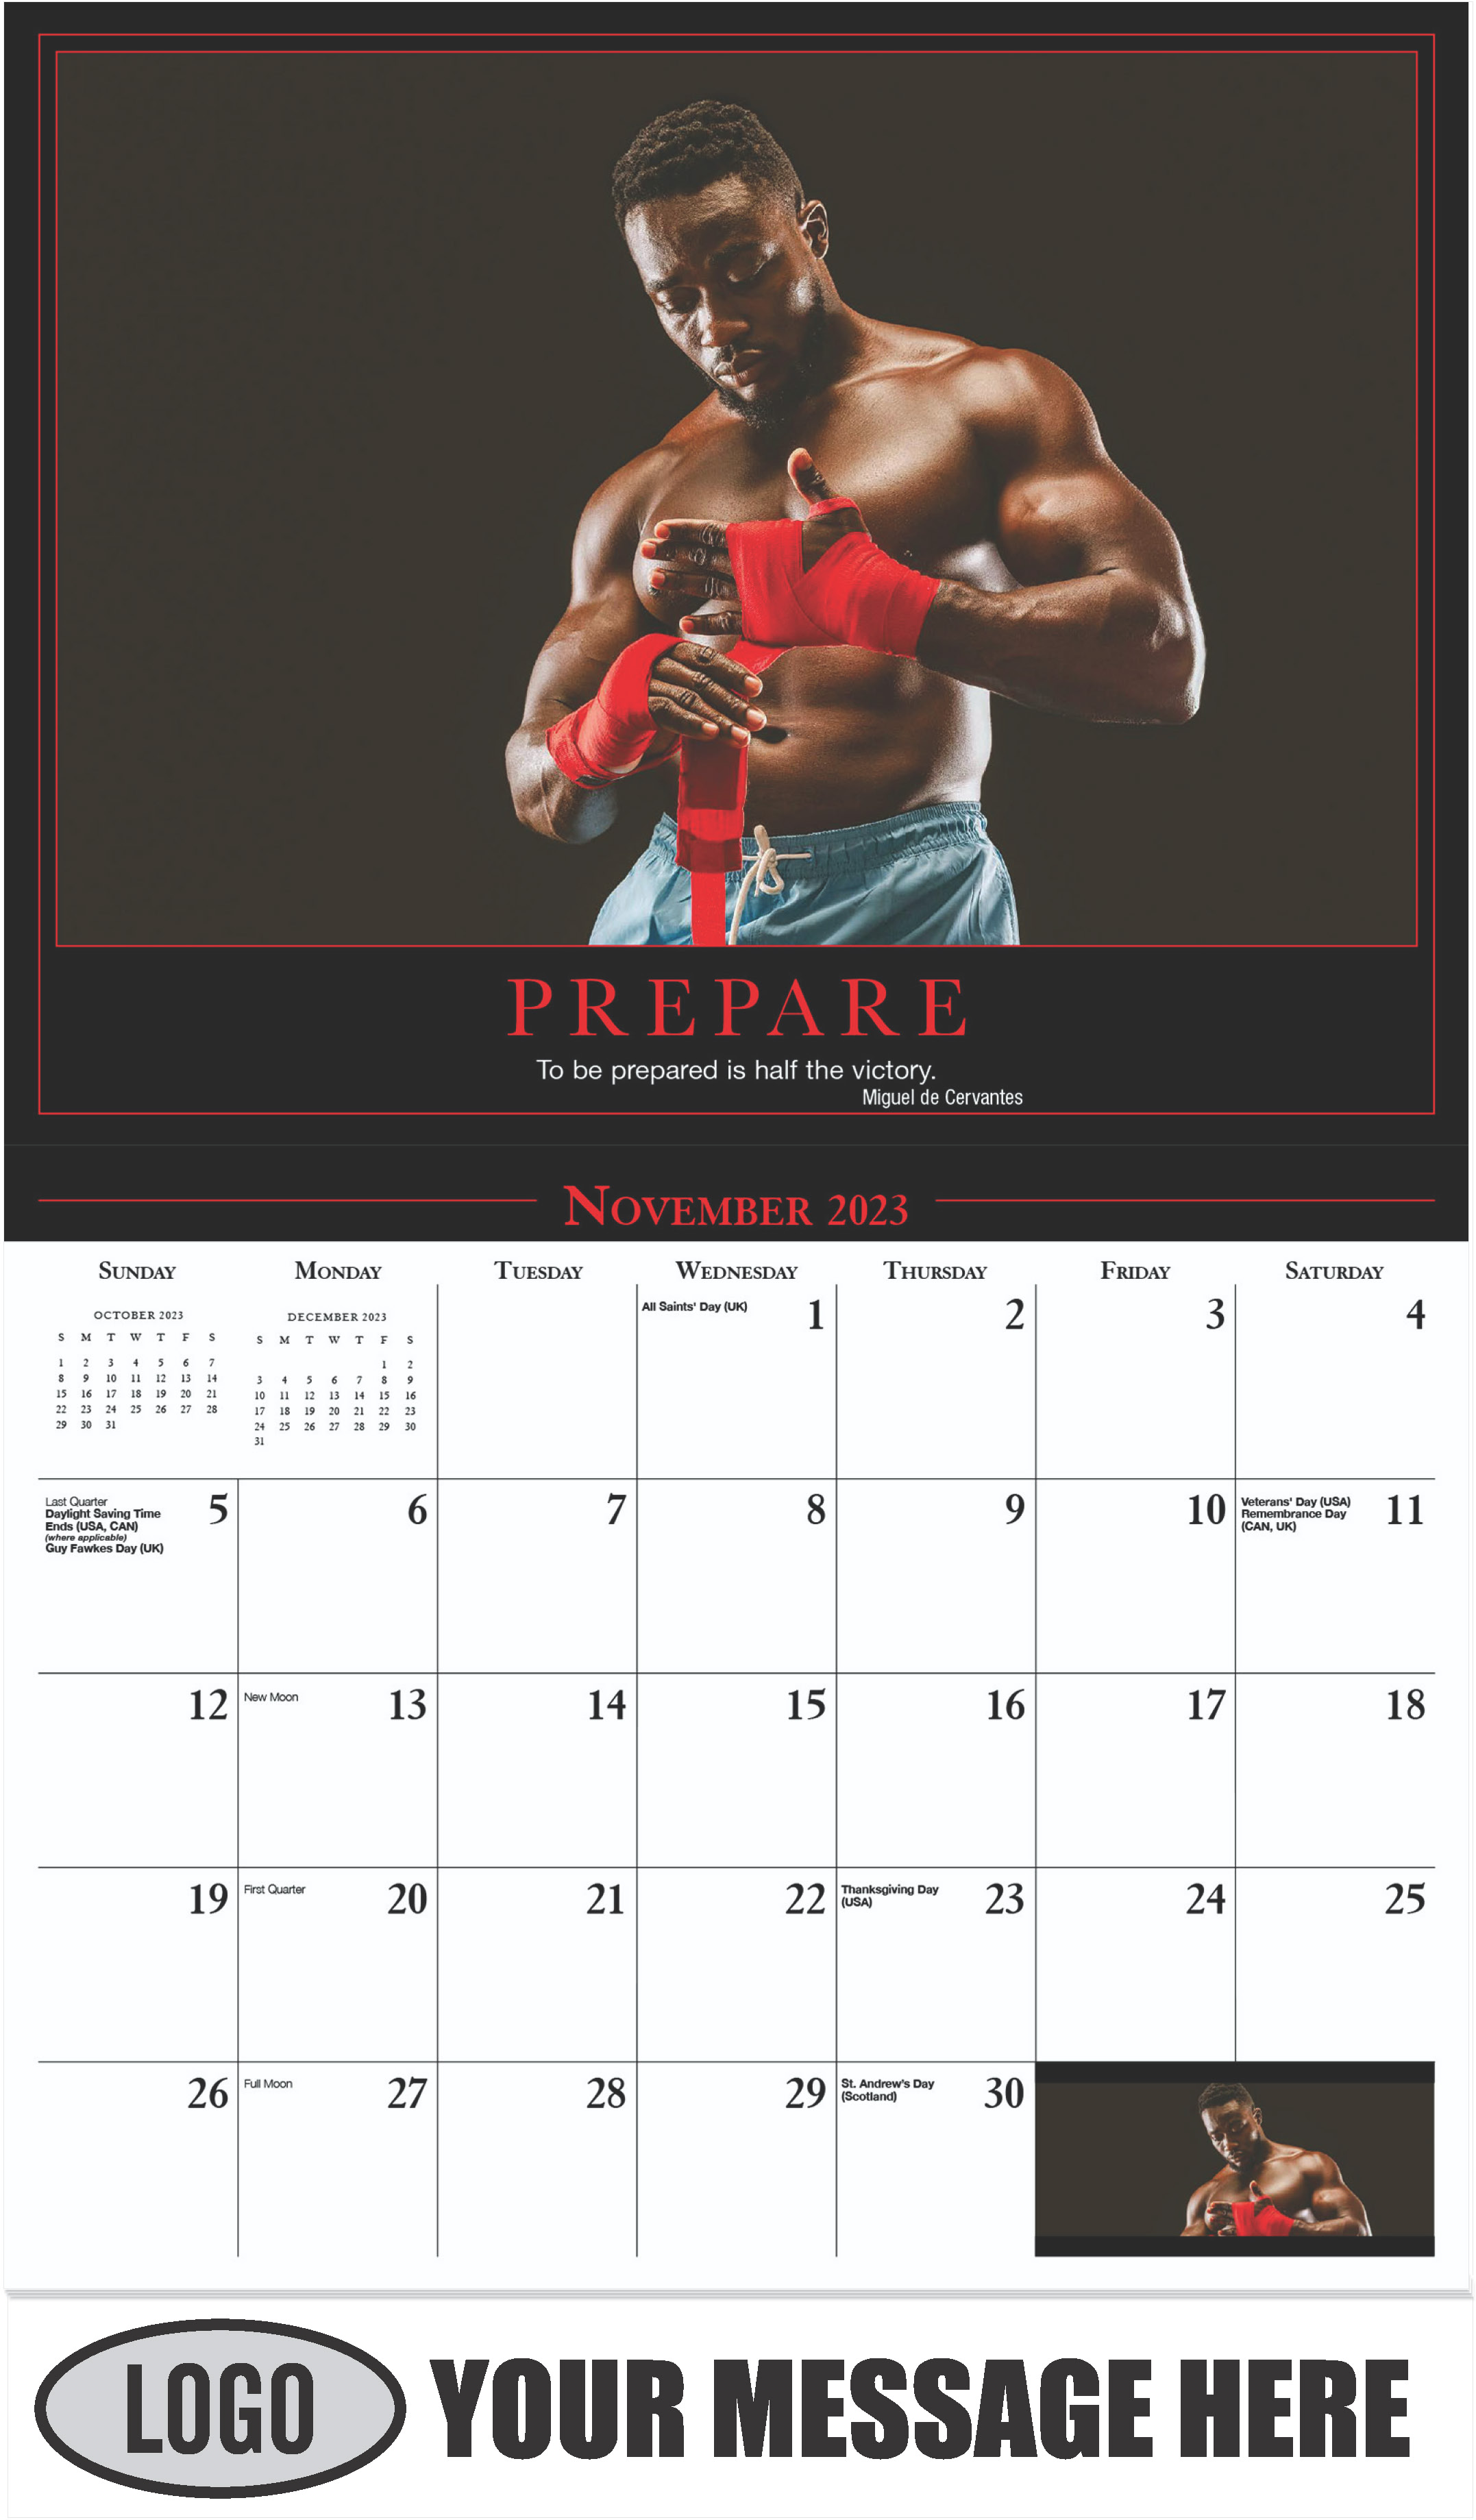 PREPARE ''To be prepared is half the victory.'' - Miguel de Cervantes - November - Motivation 2023 Promotional Calendar